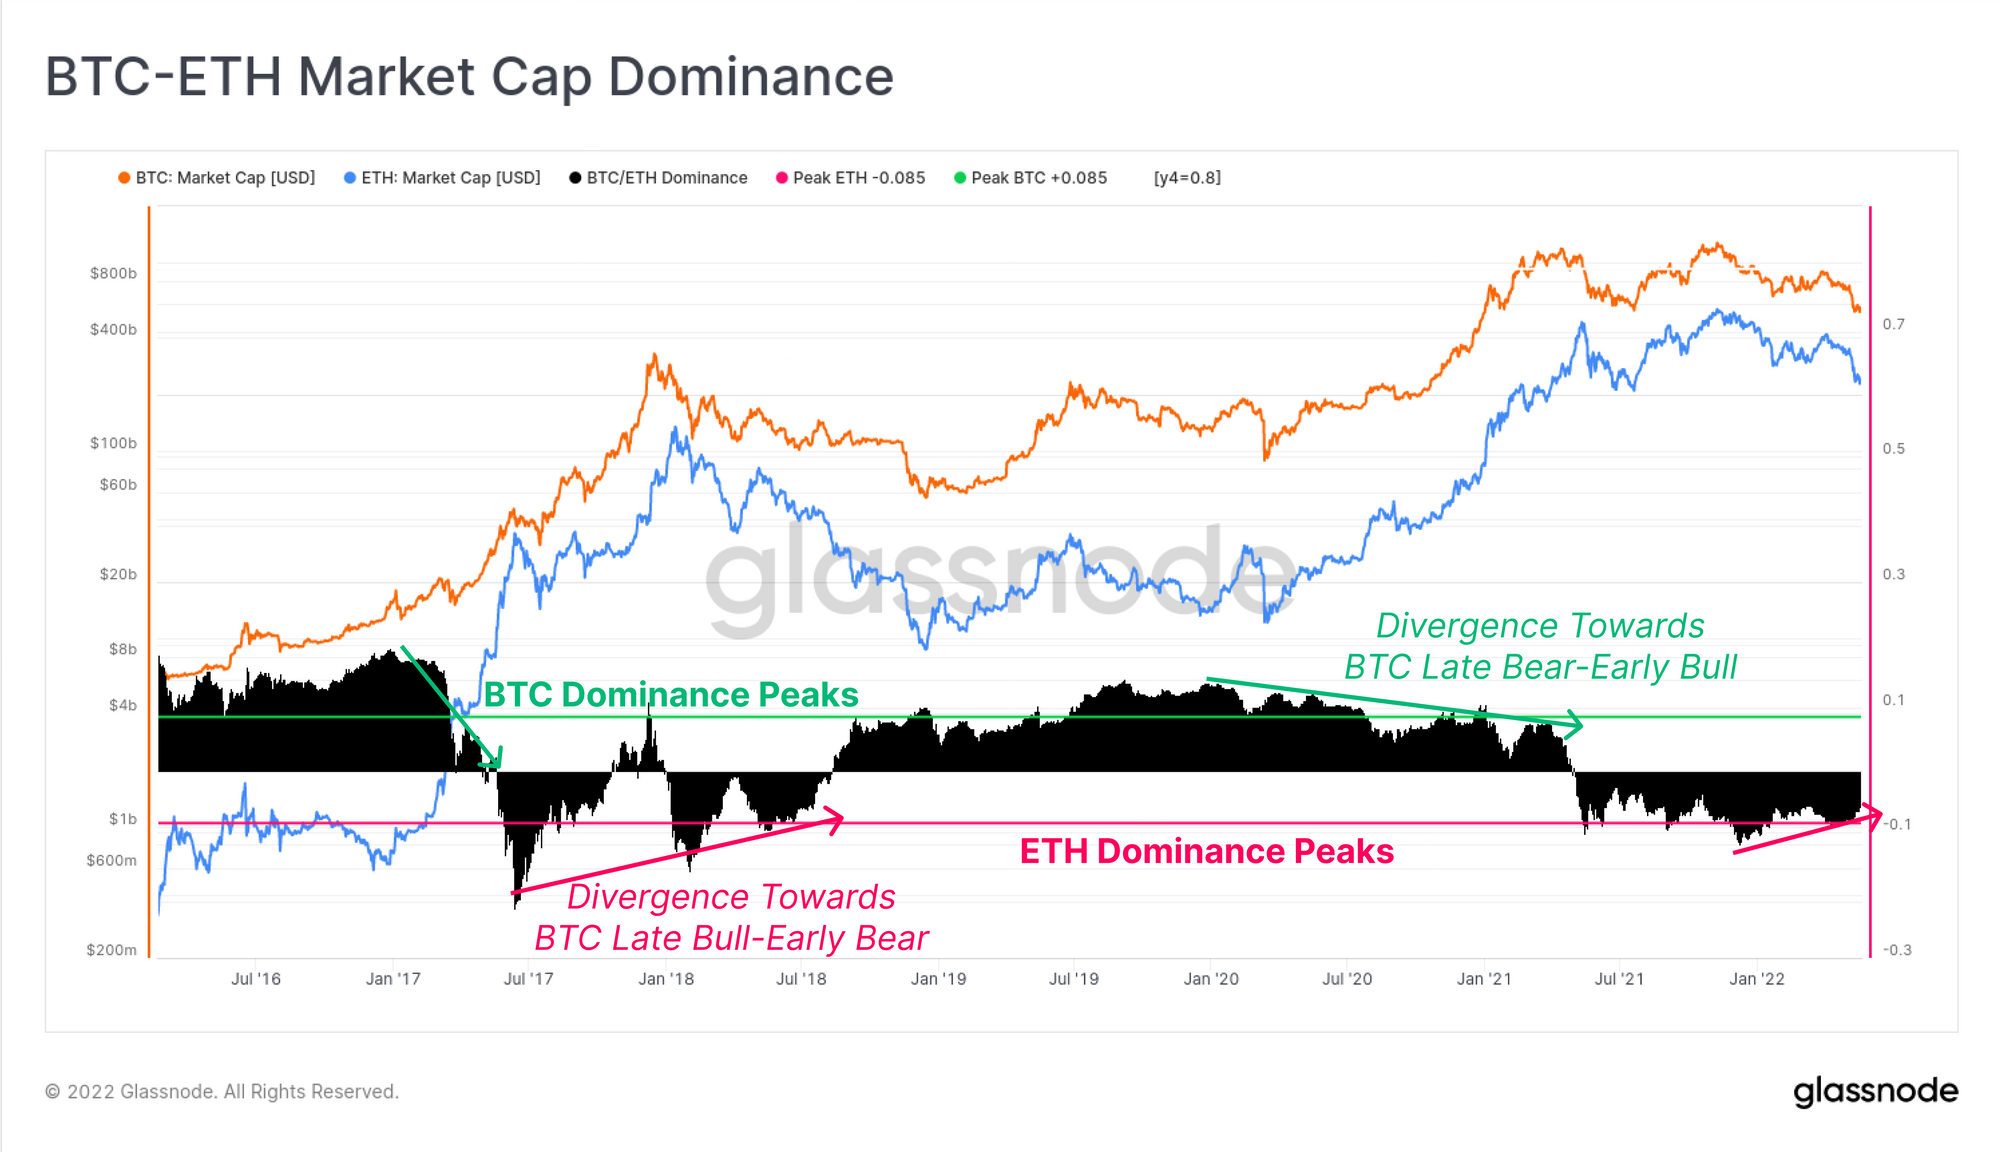 BTC-ETH Market Cap Dominance